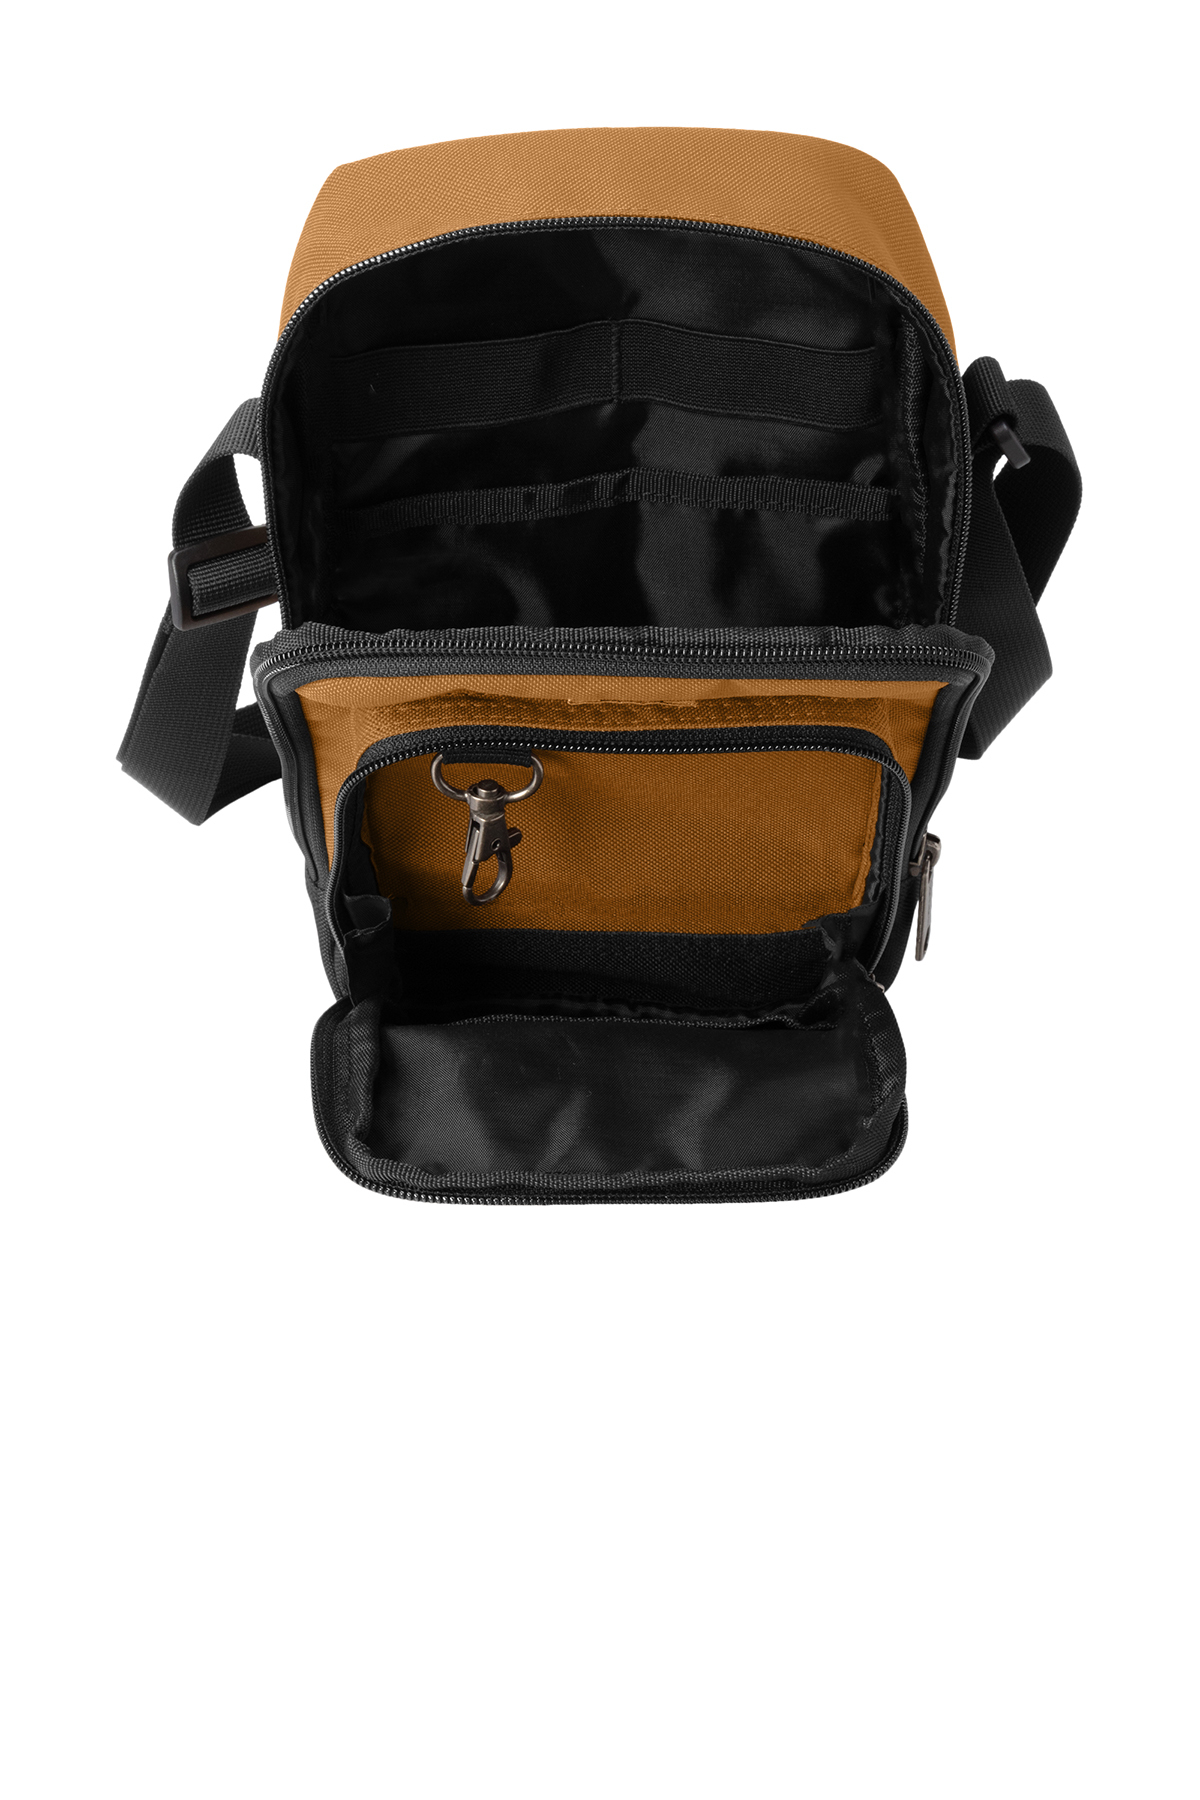 Carhartt Black Crossbody Horizontal Bag